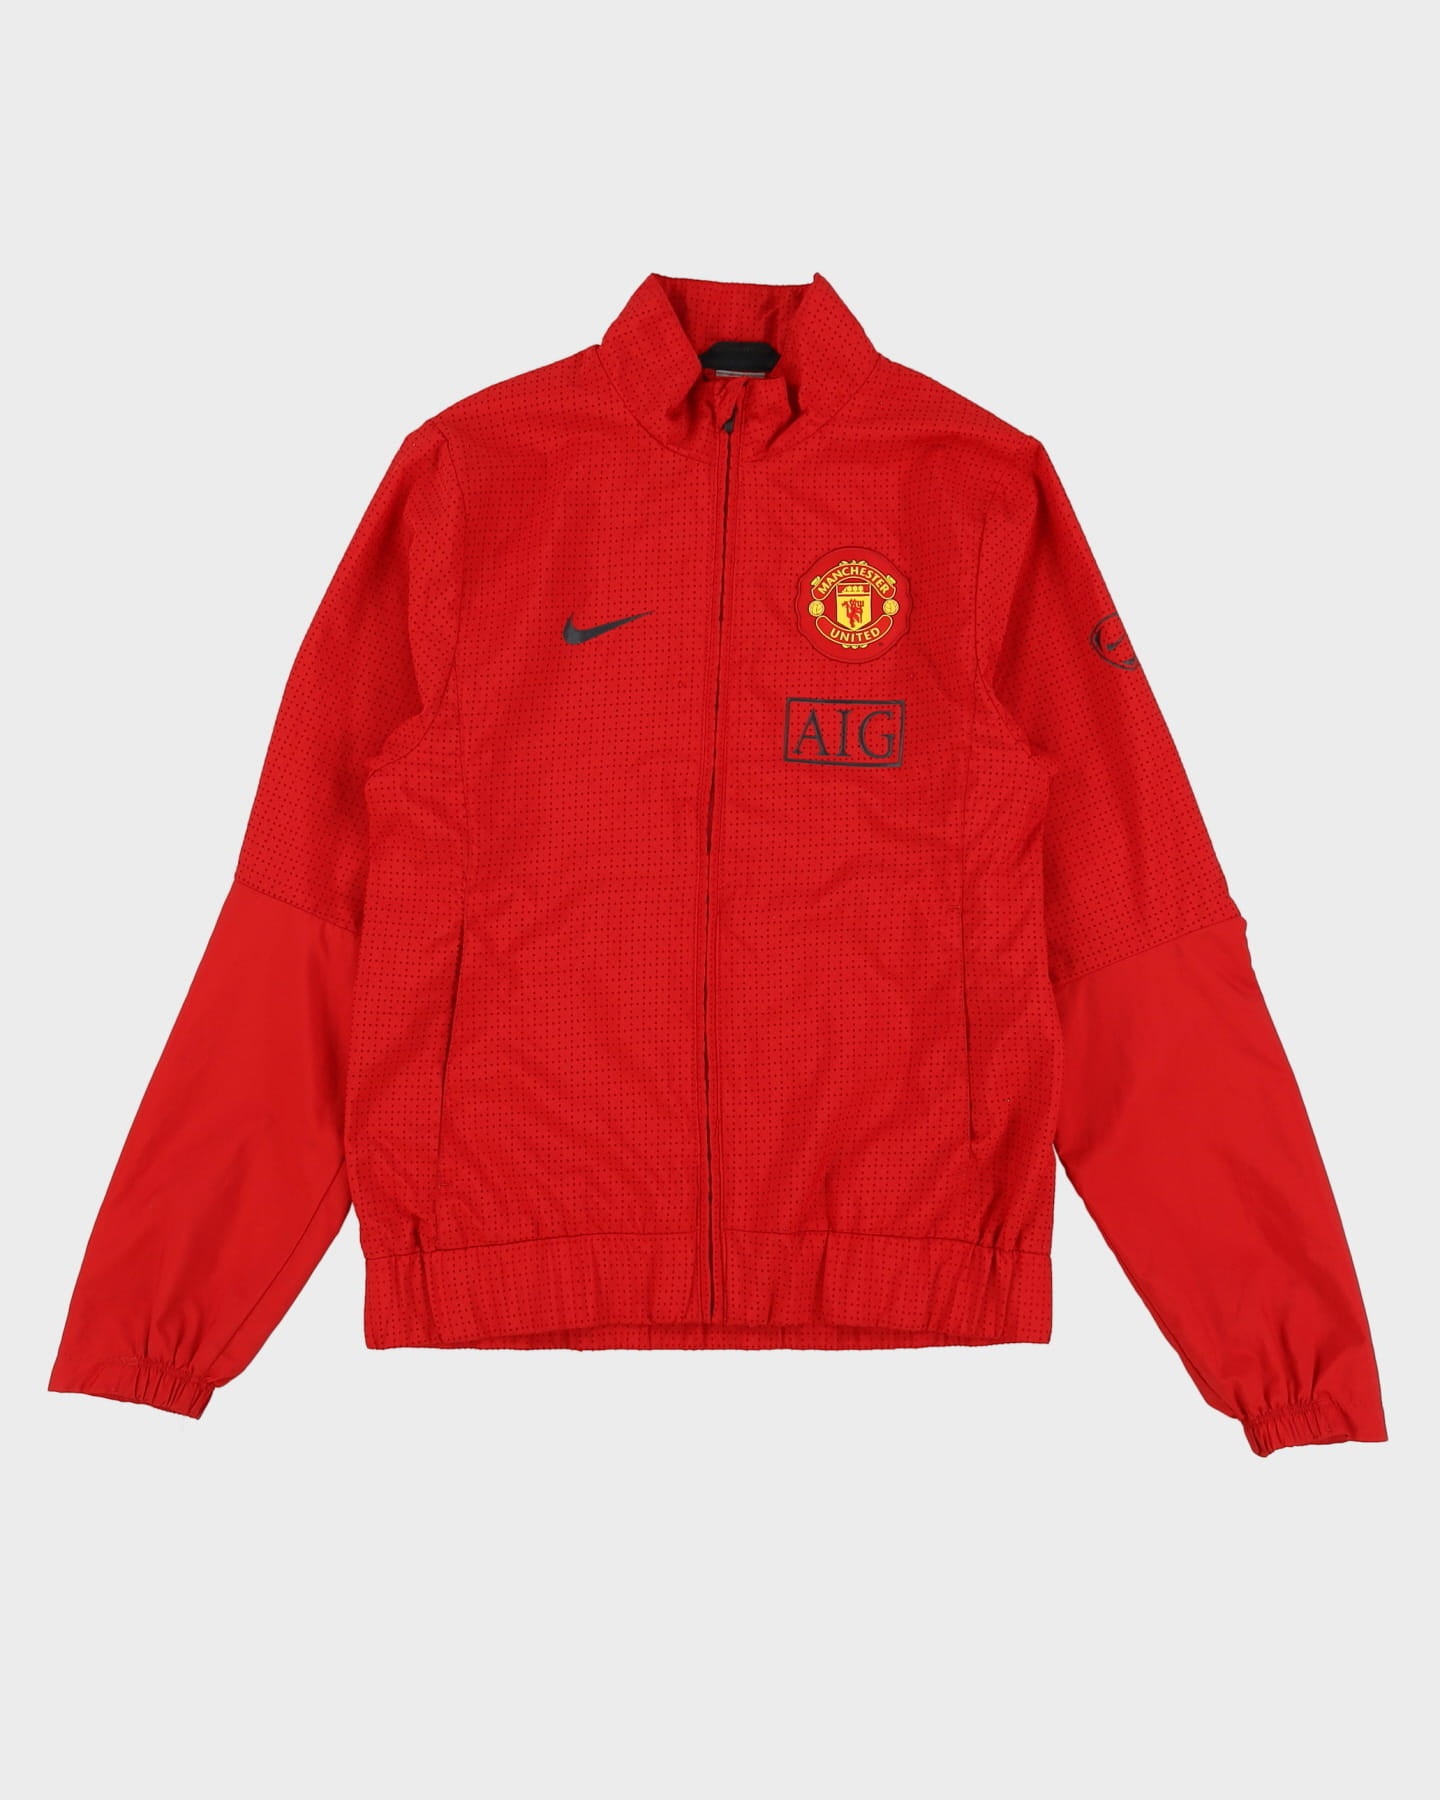 Nike Manchester United Red Track Jacket / Windbreaker - S